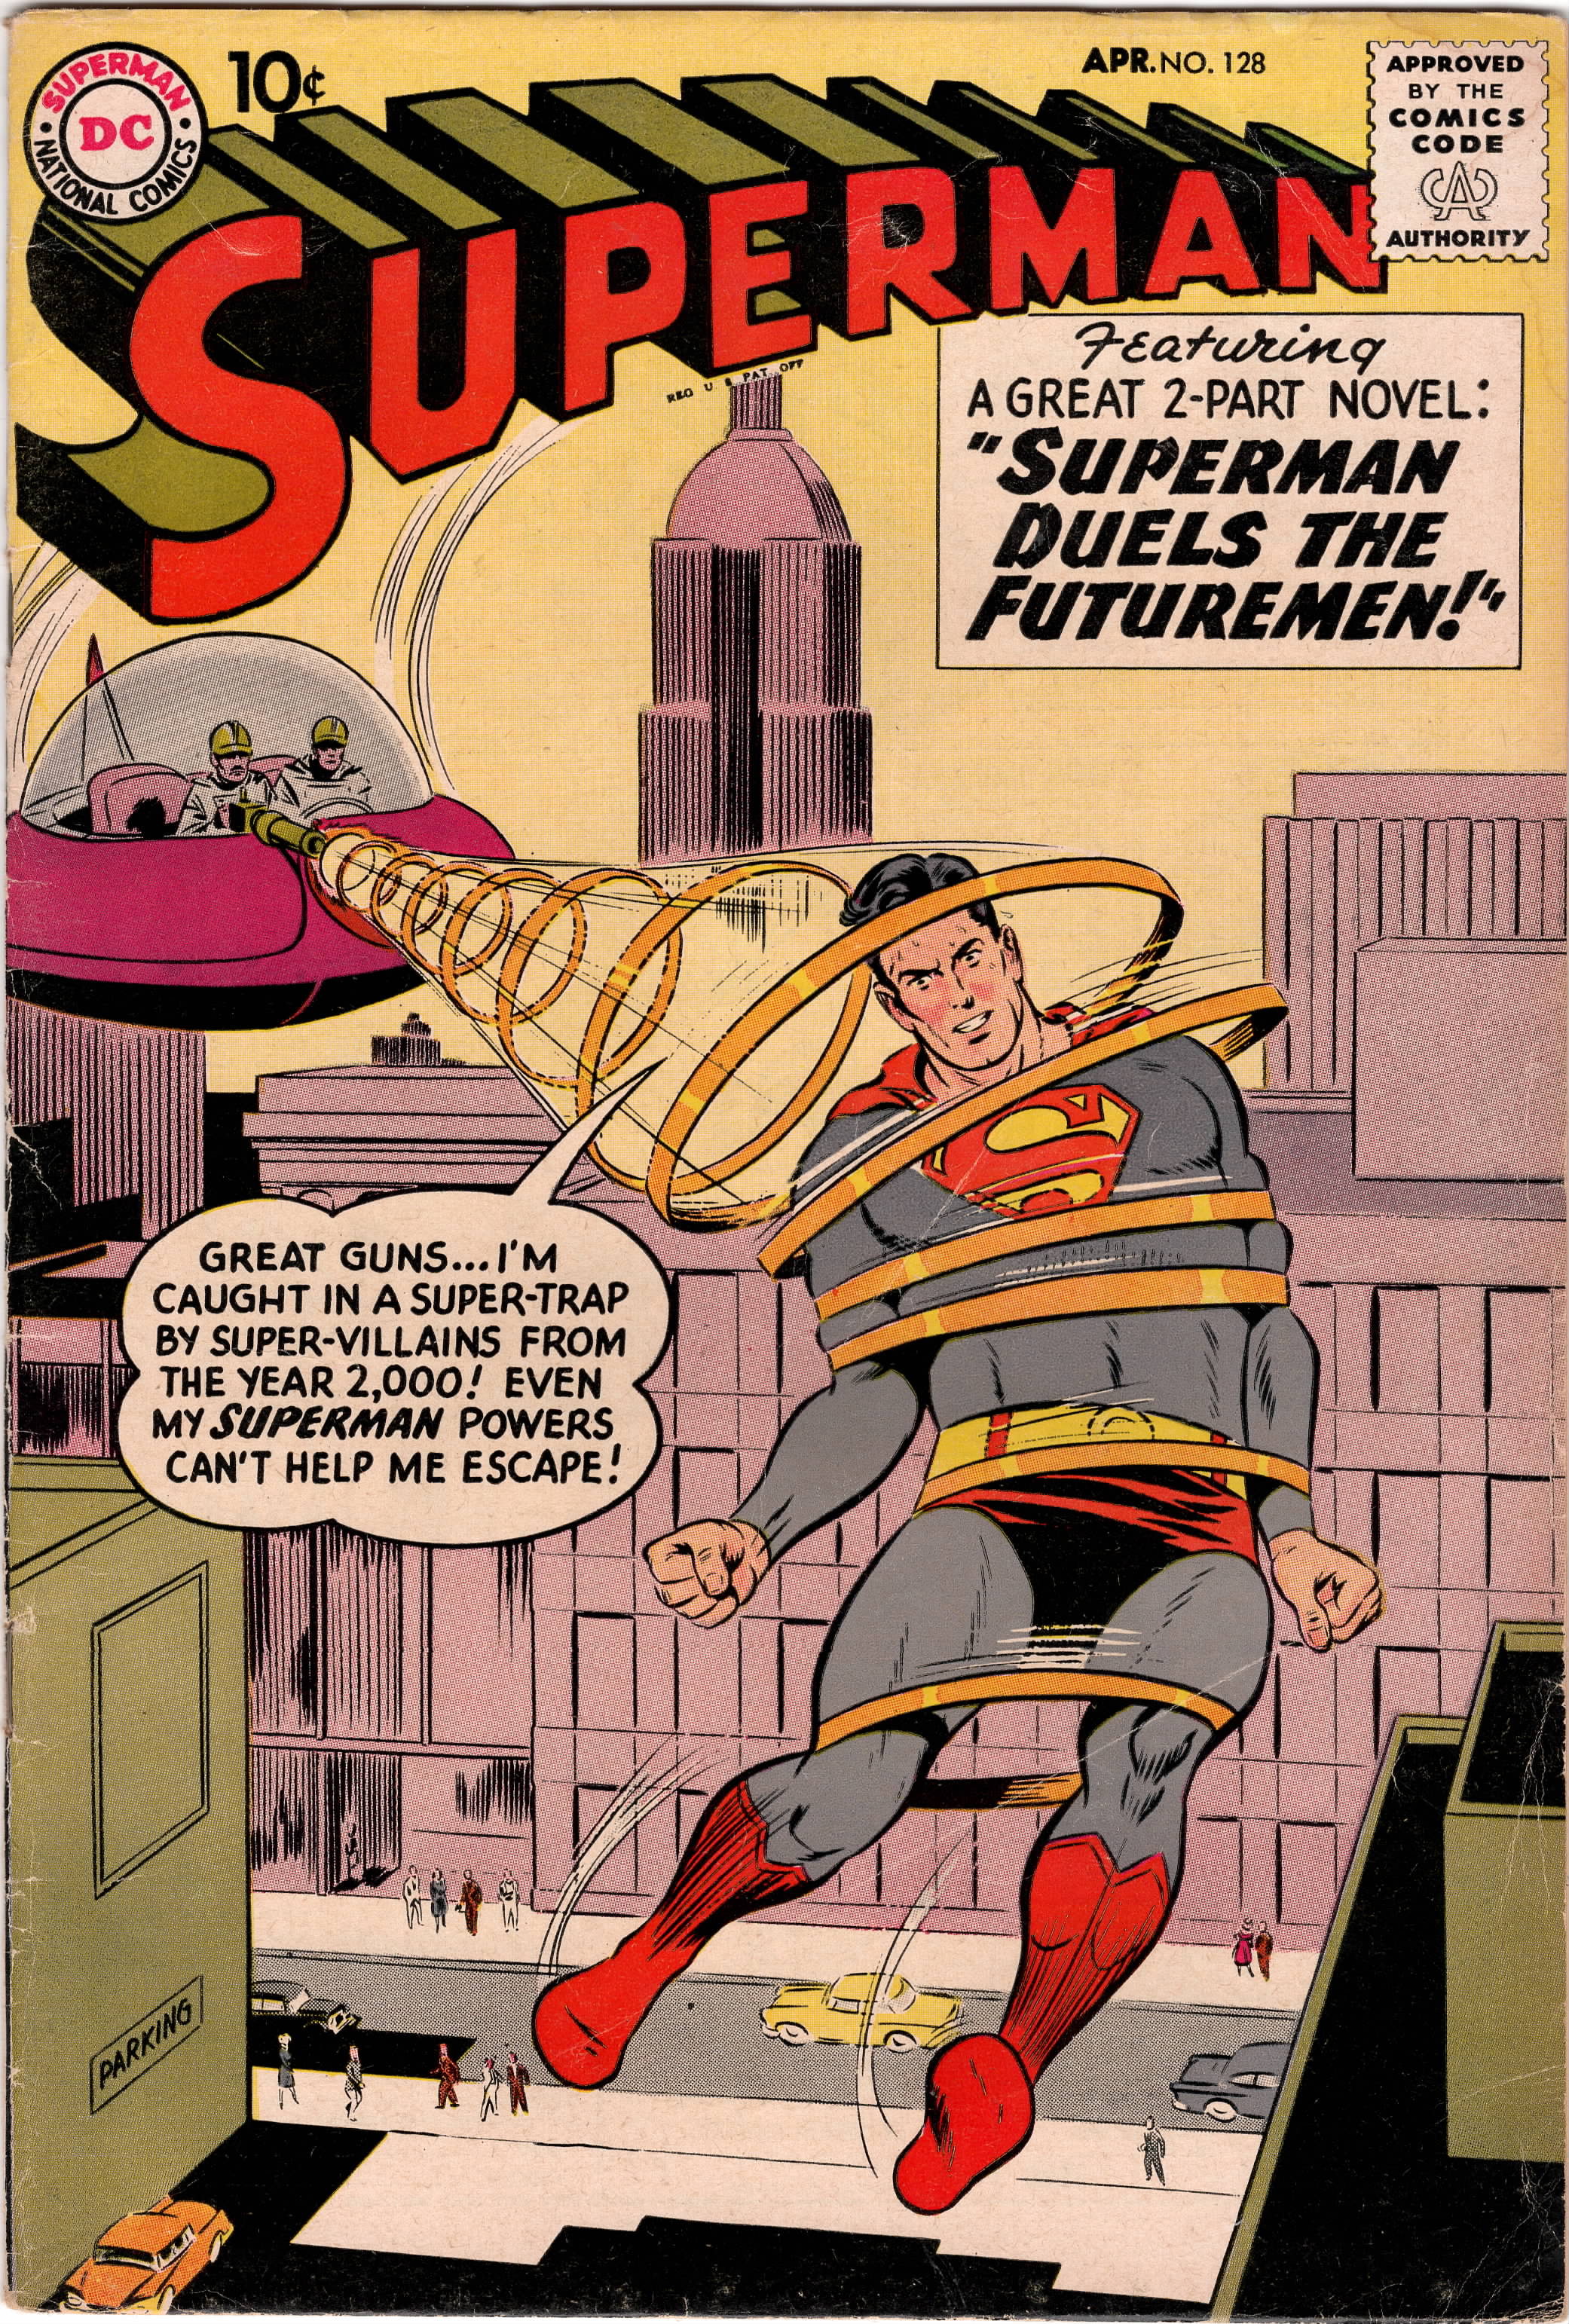 Superman #128